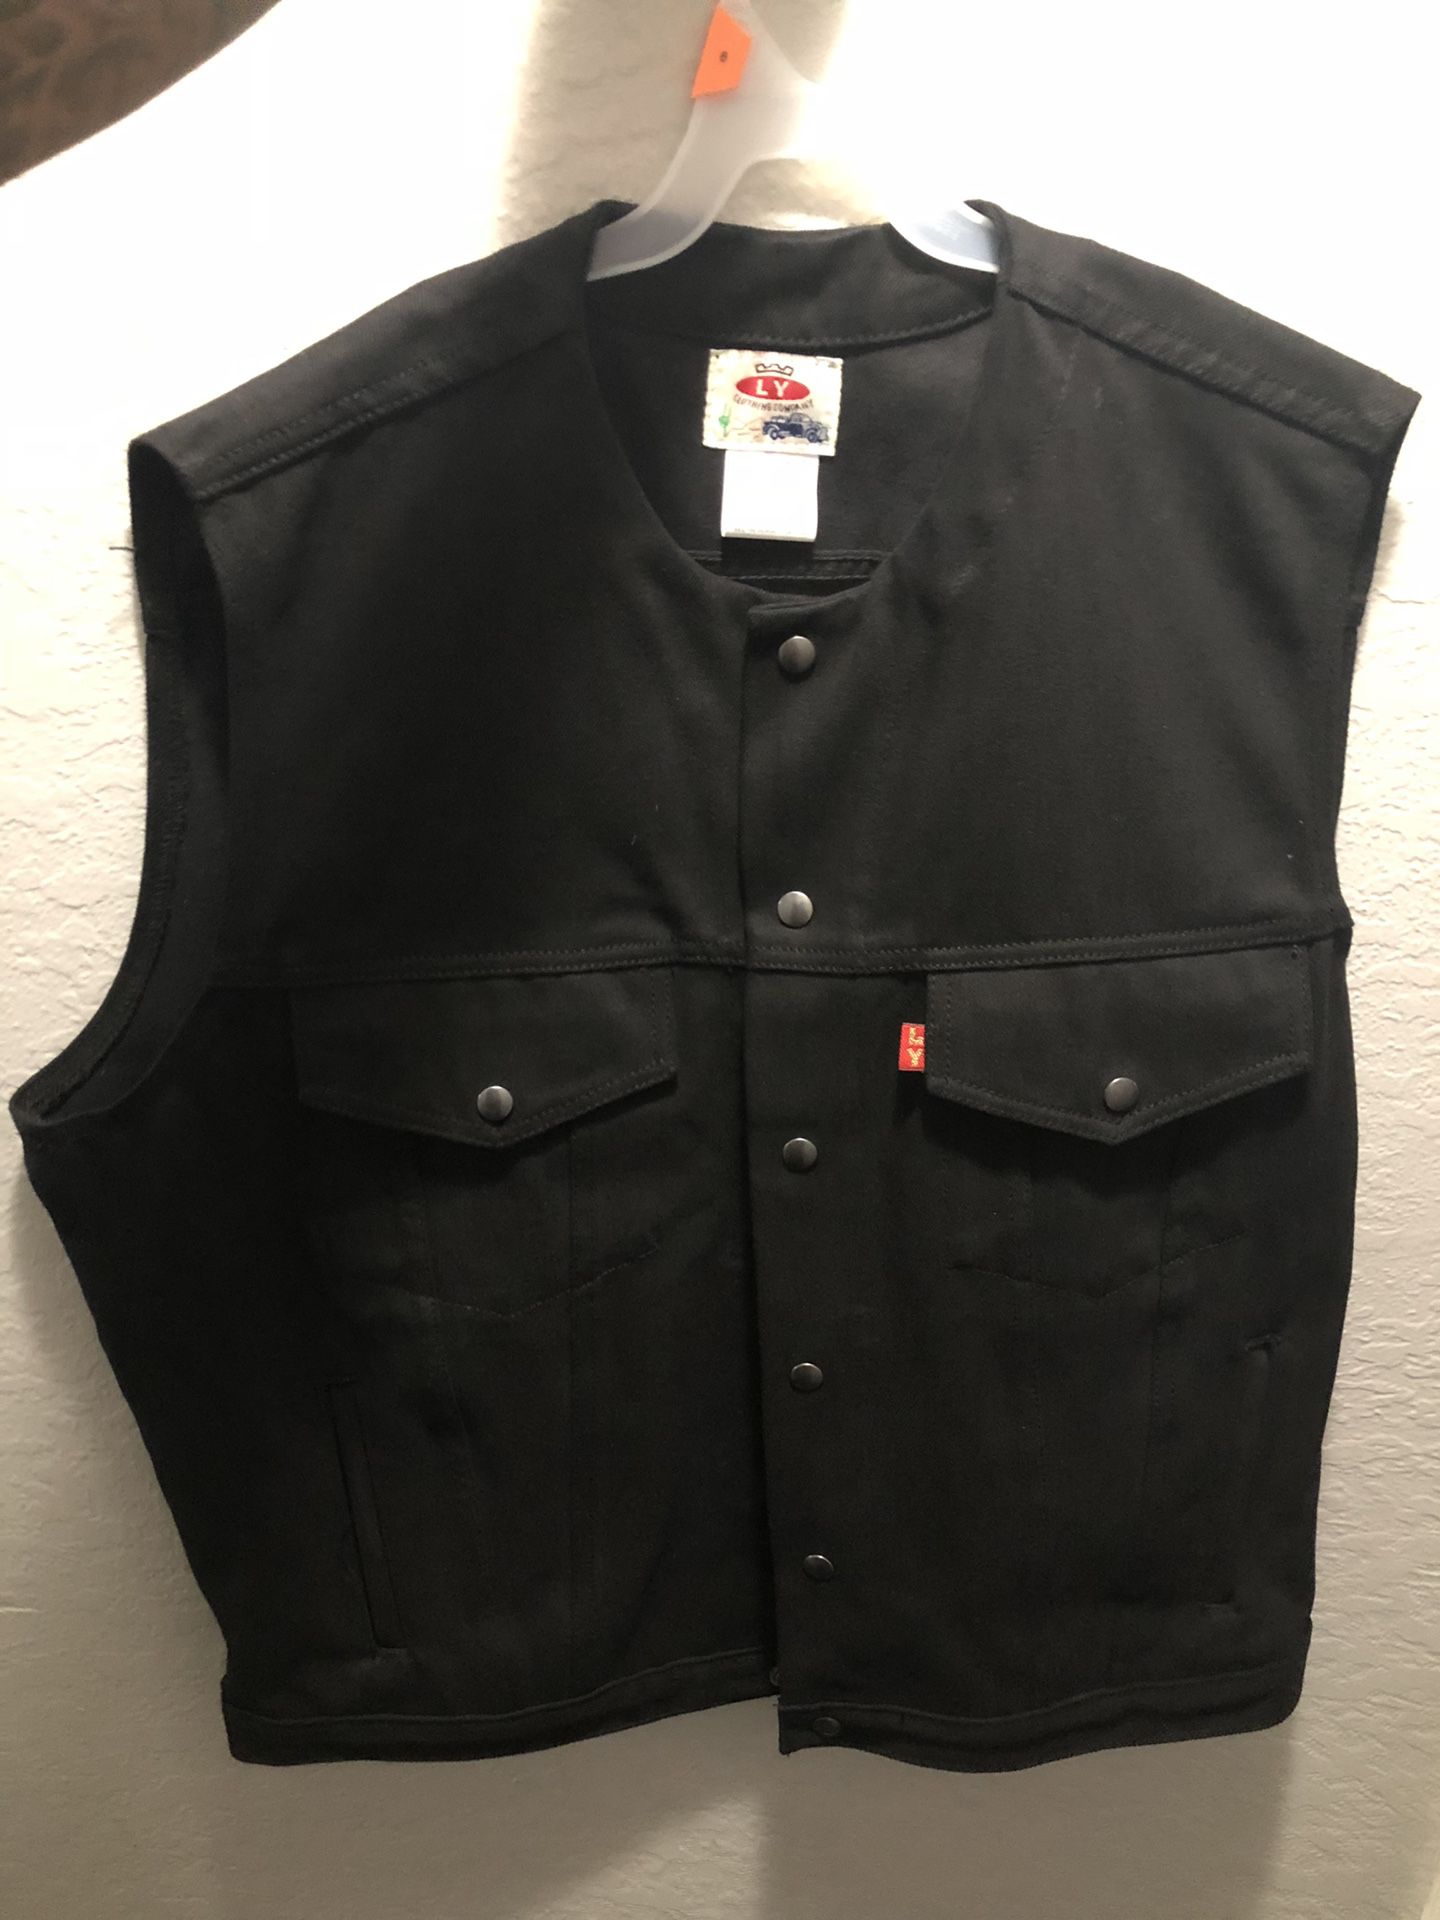 Brand new Black motorcycle vest 60 obo